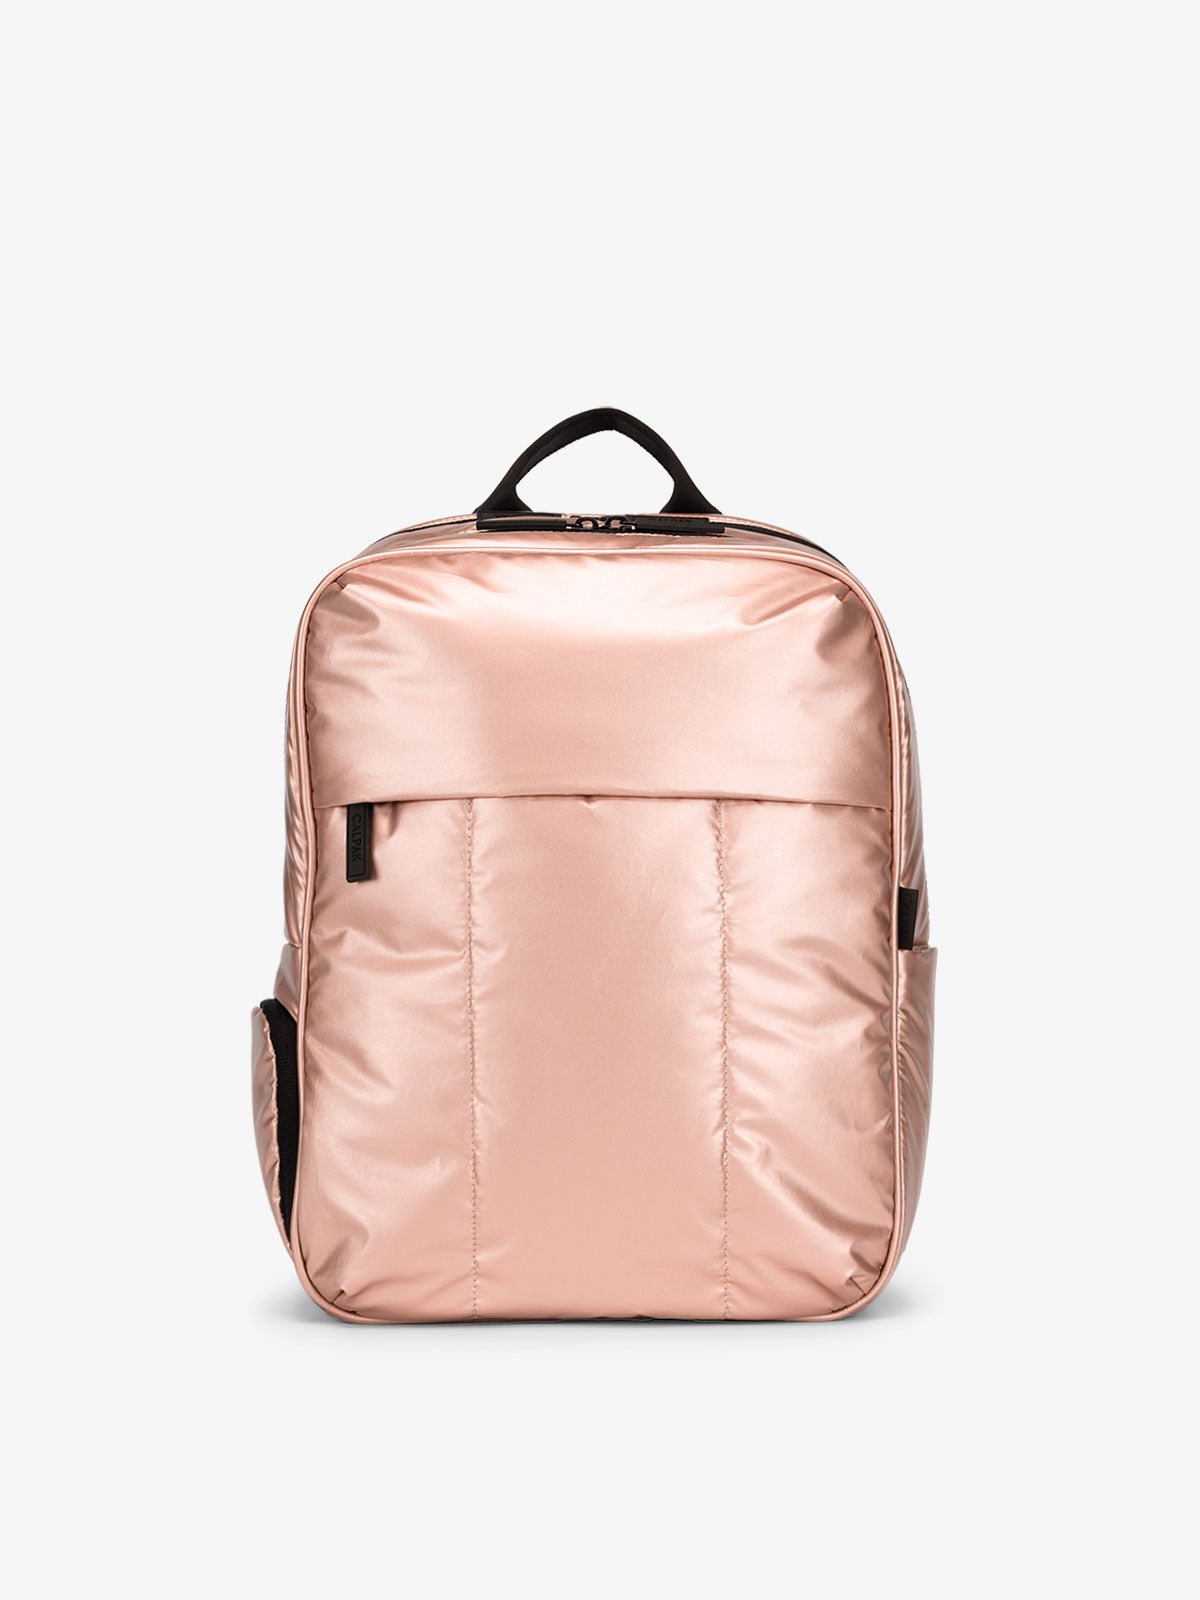 CALPAK Luka Laptop Backpack for school in metallic rose gold